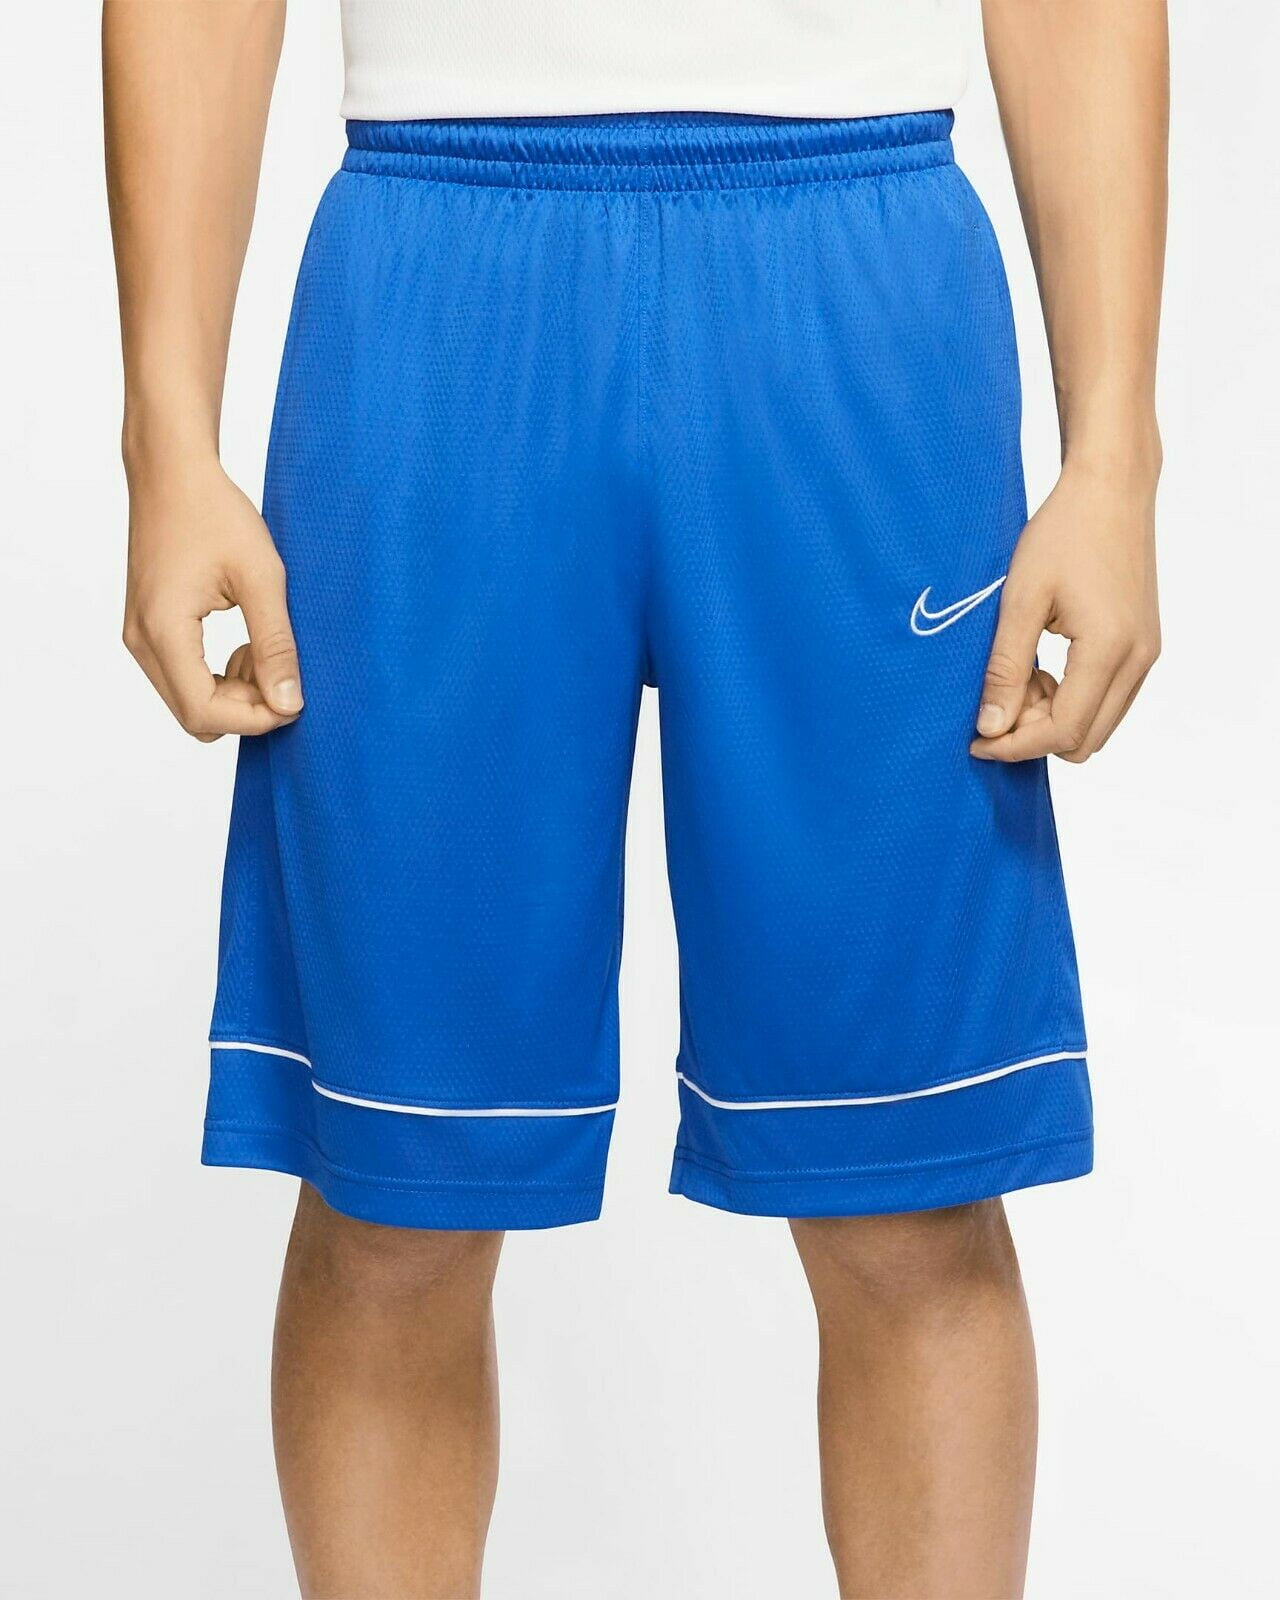 Nike Fastbreak Game Royal/White Men's Basketball Shorts Size L ...